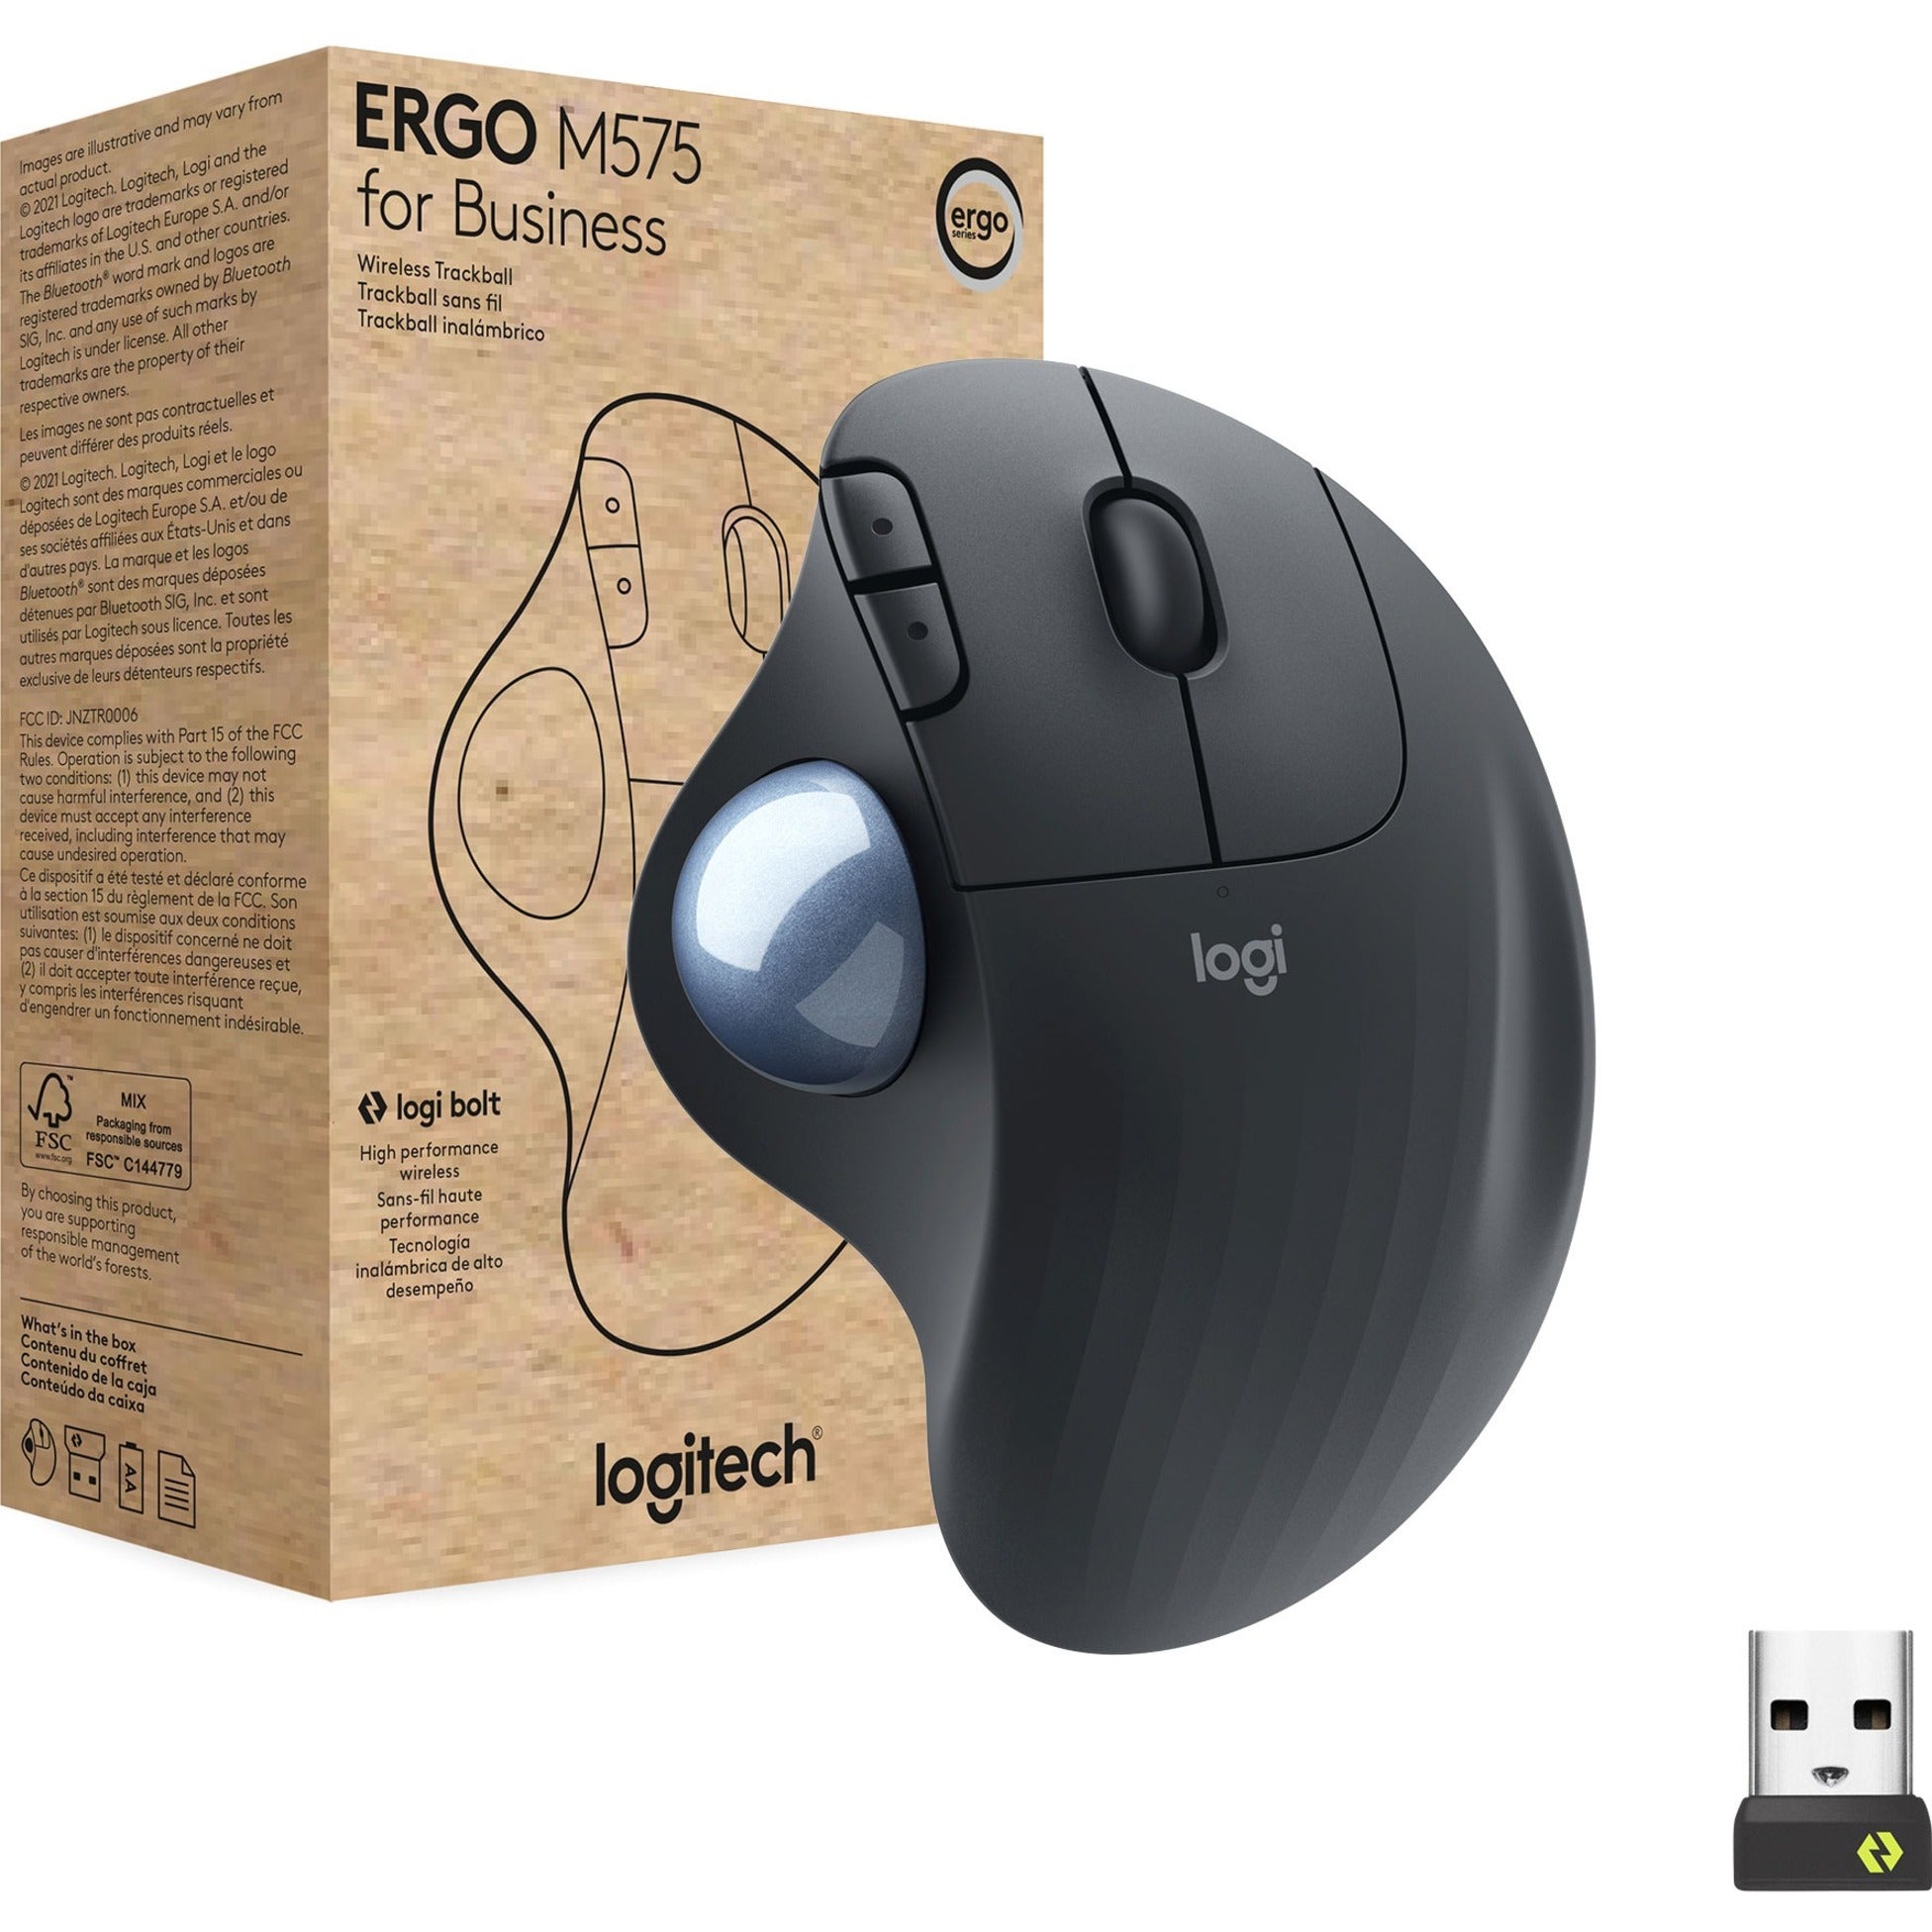 Logitech 910-006197 ERGO M575 Wireless Trackball, Graphite - Brown Box